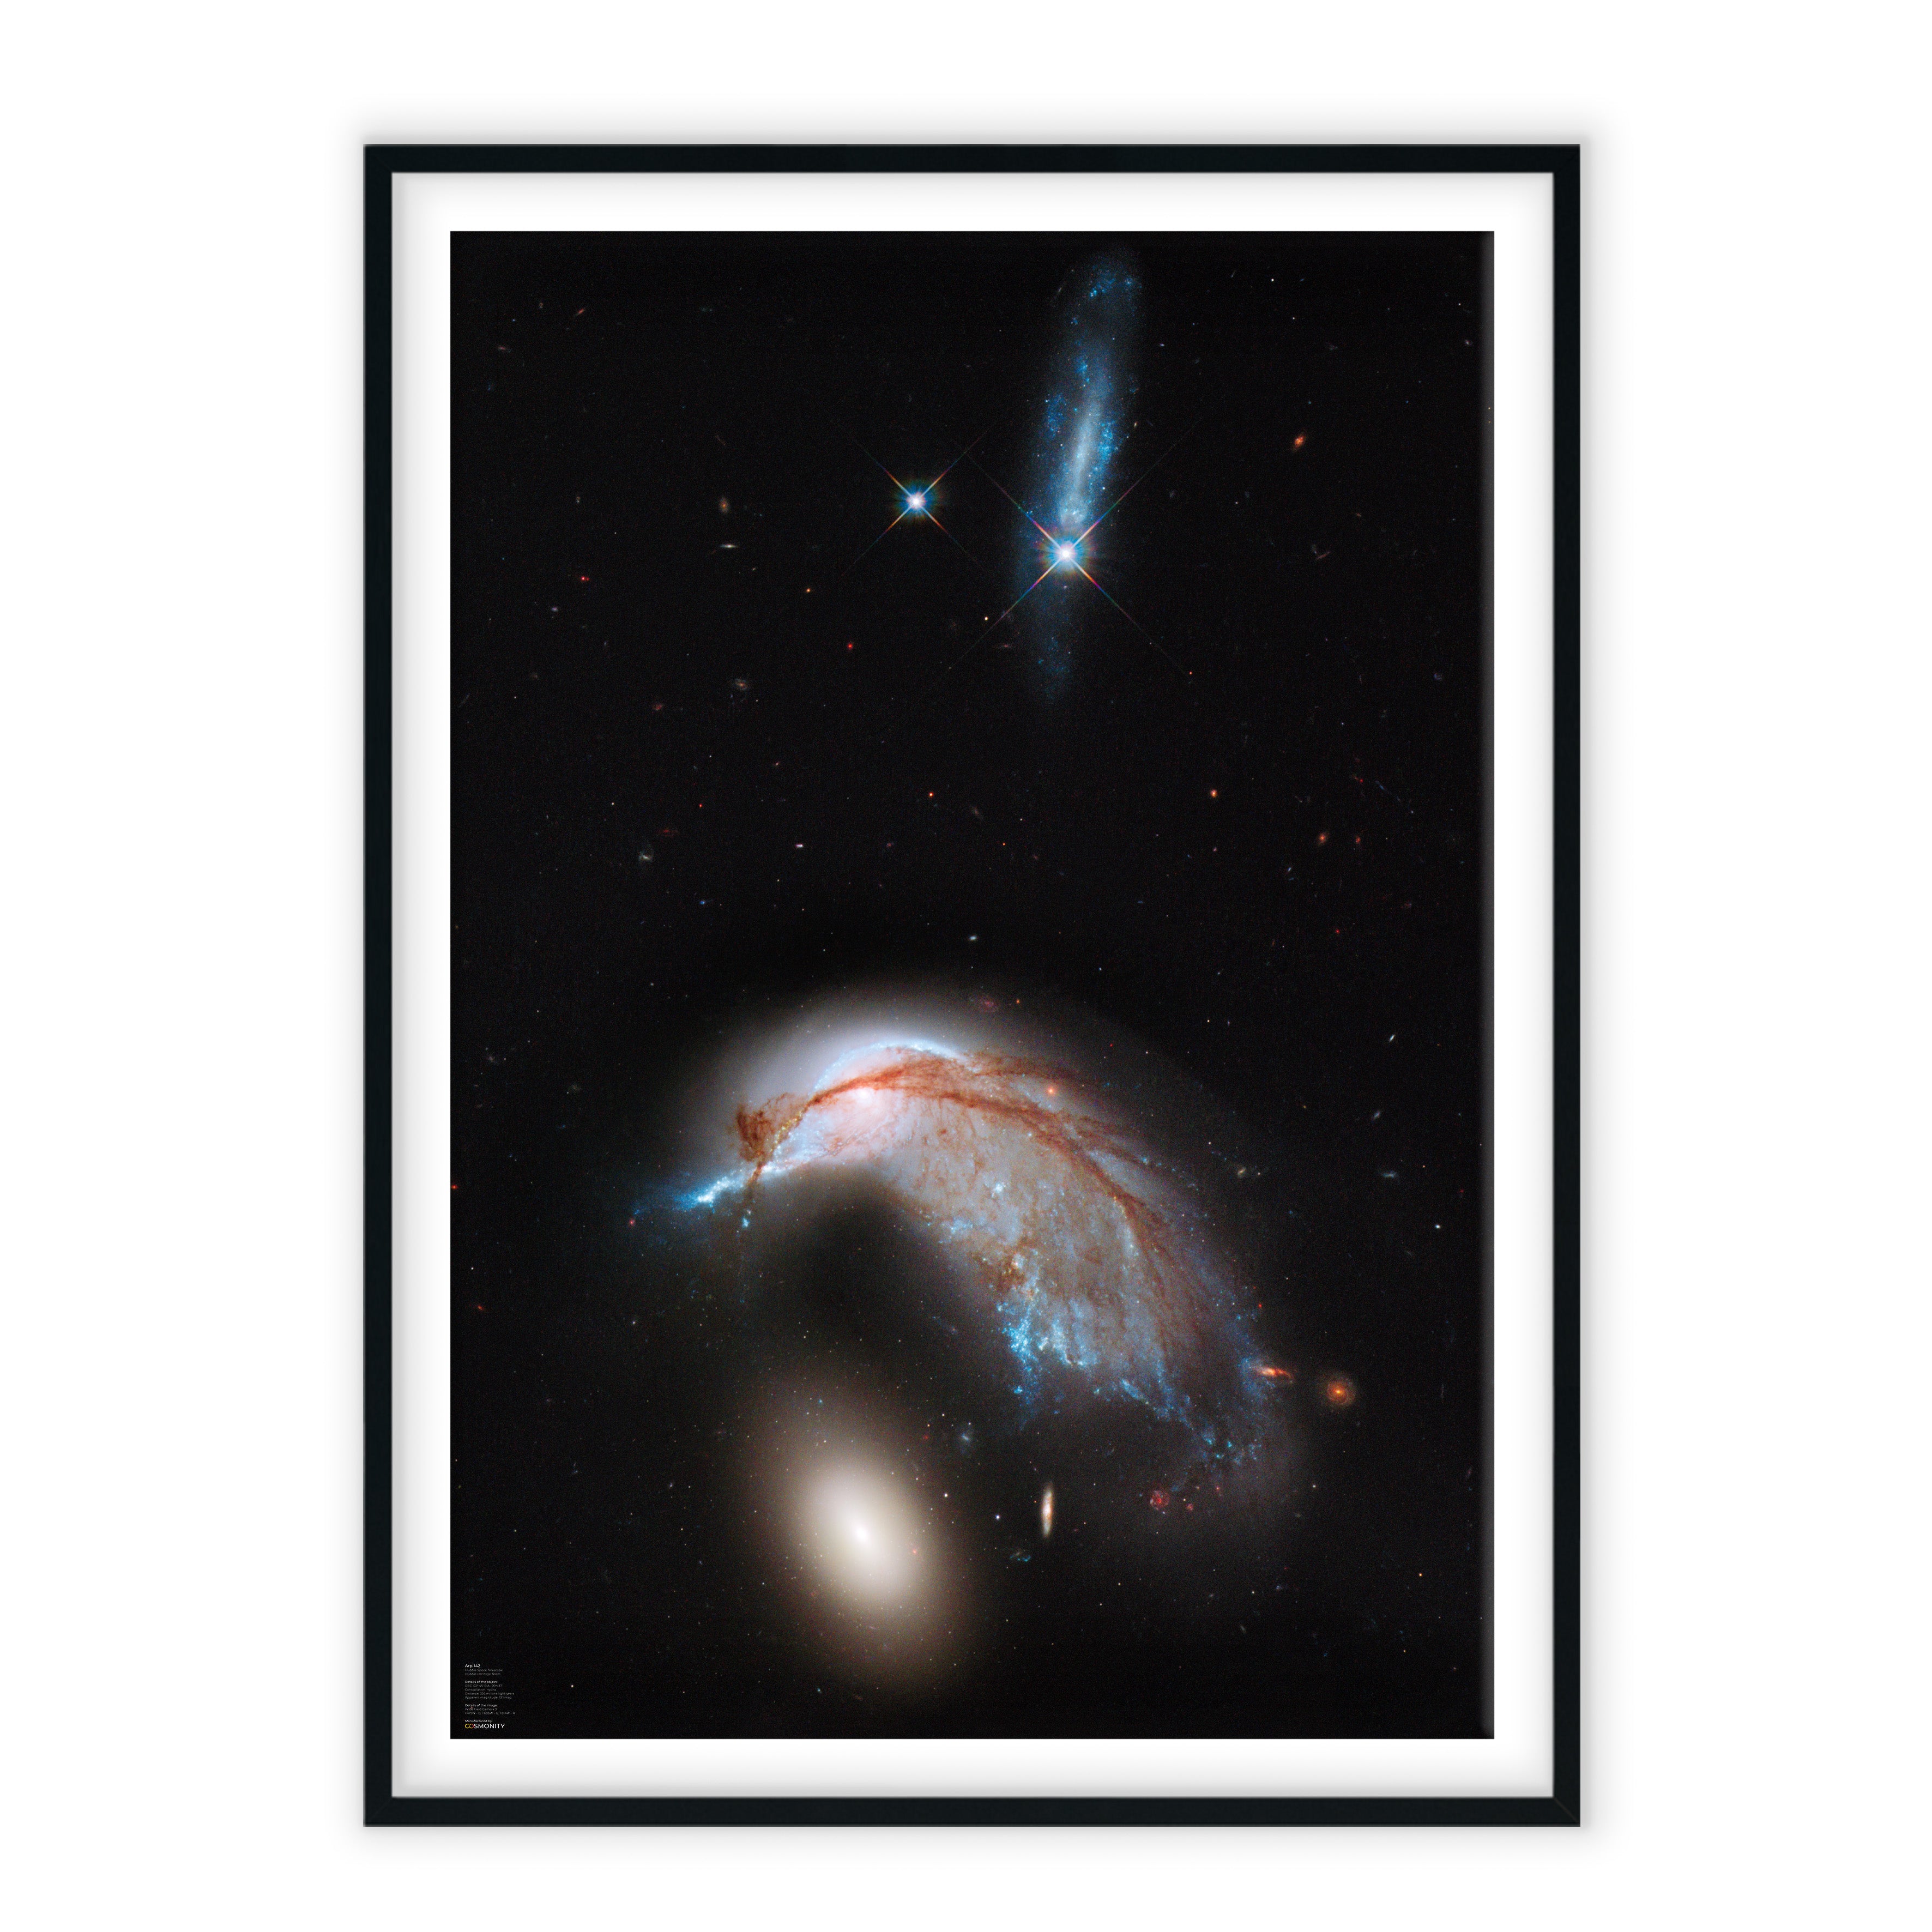 Penguin Galaxy - Arp 142